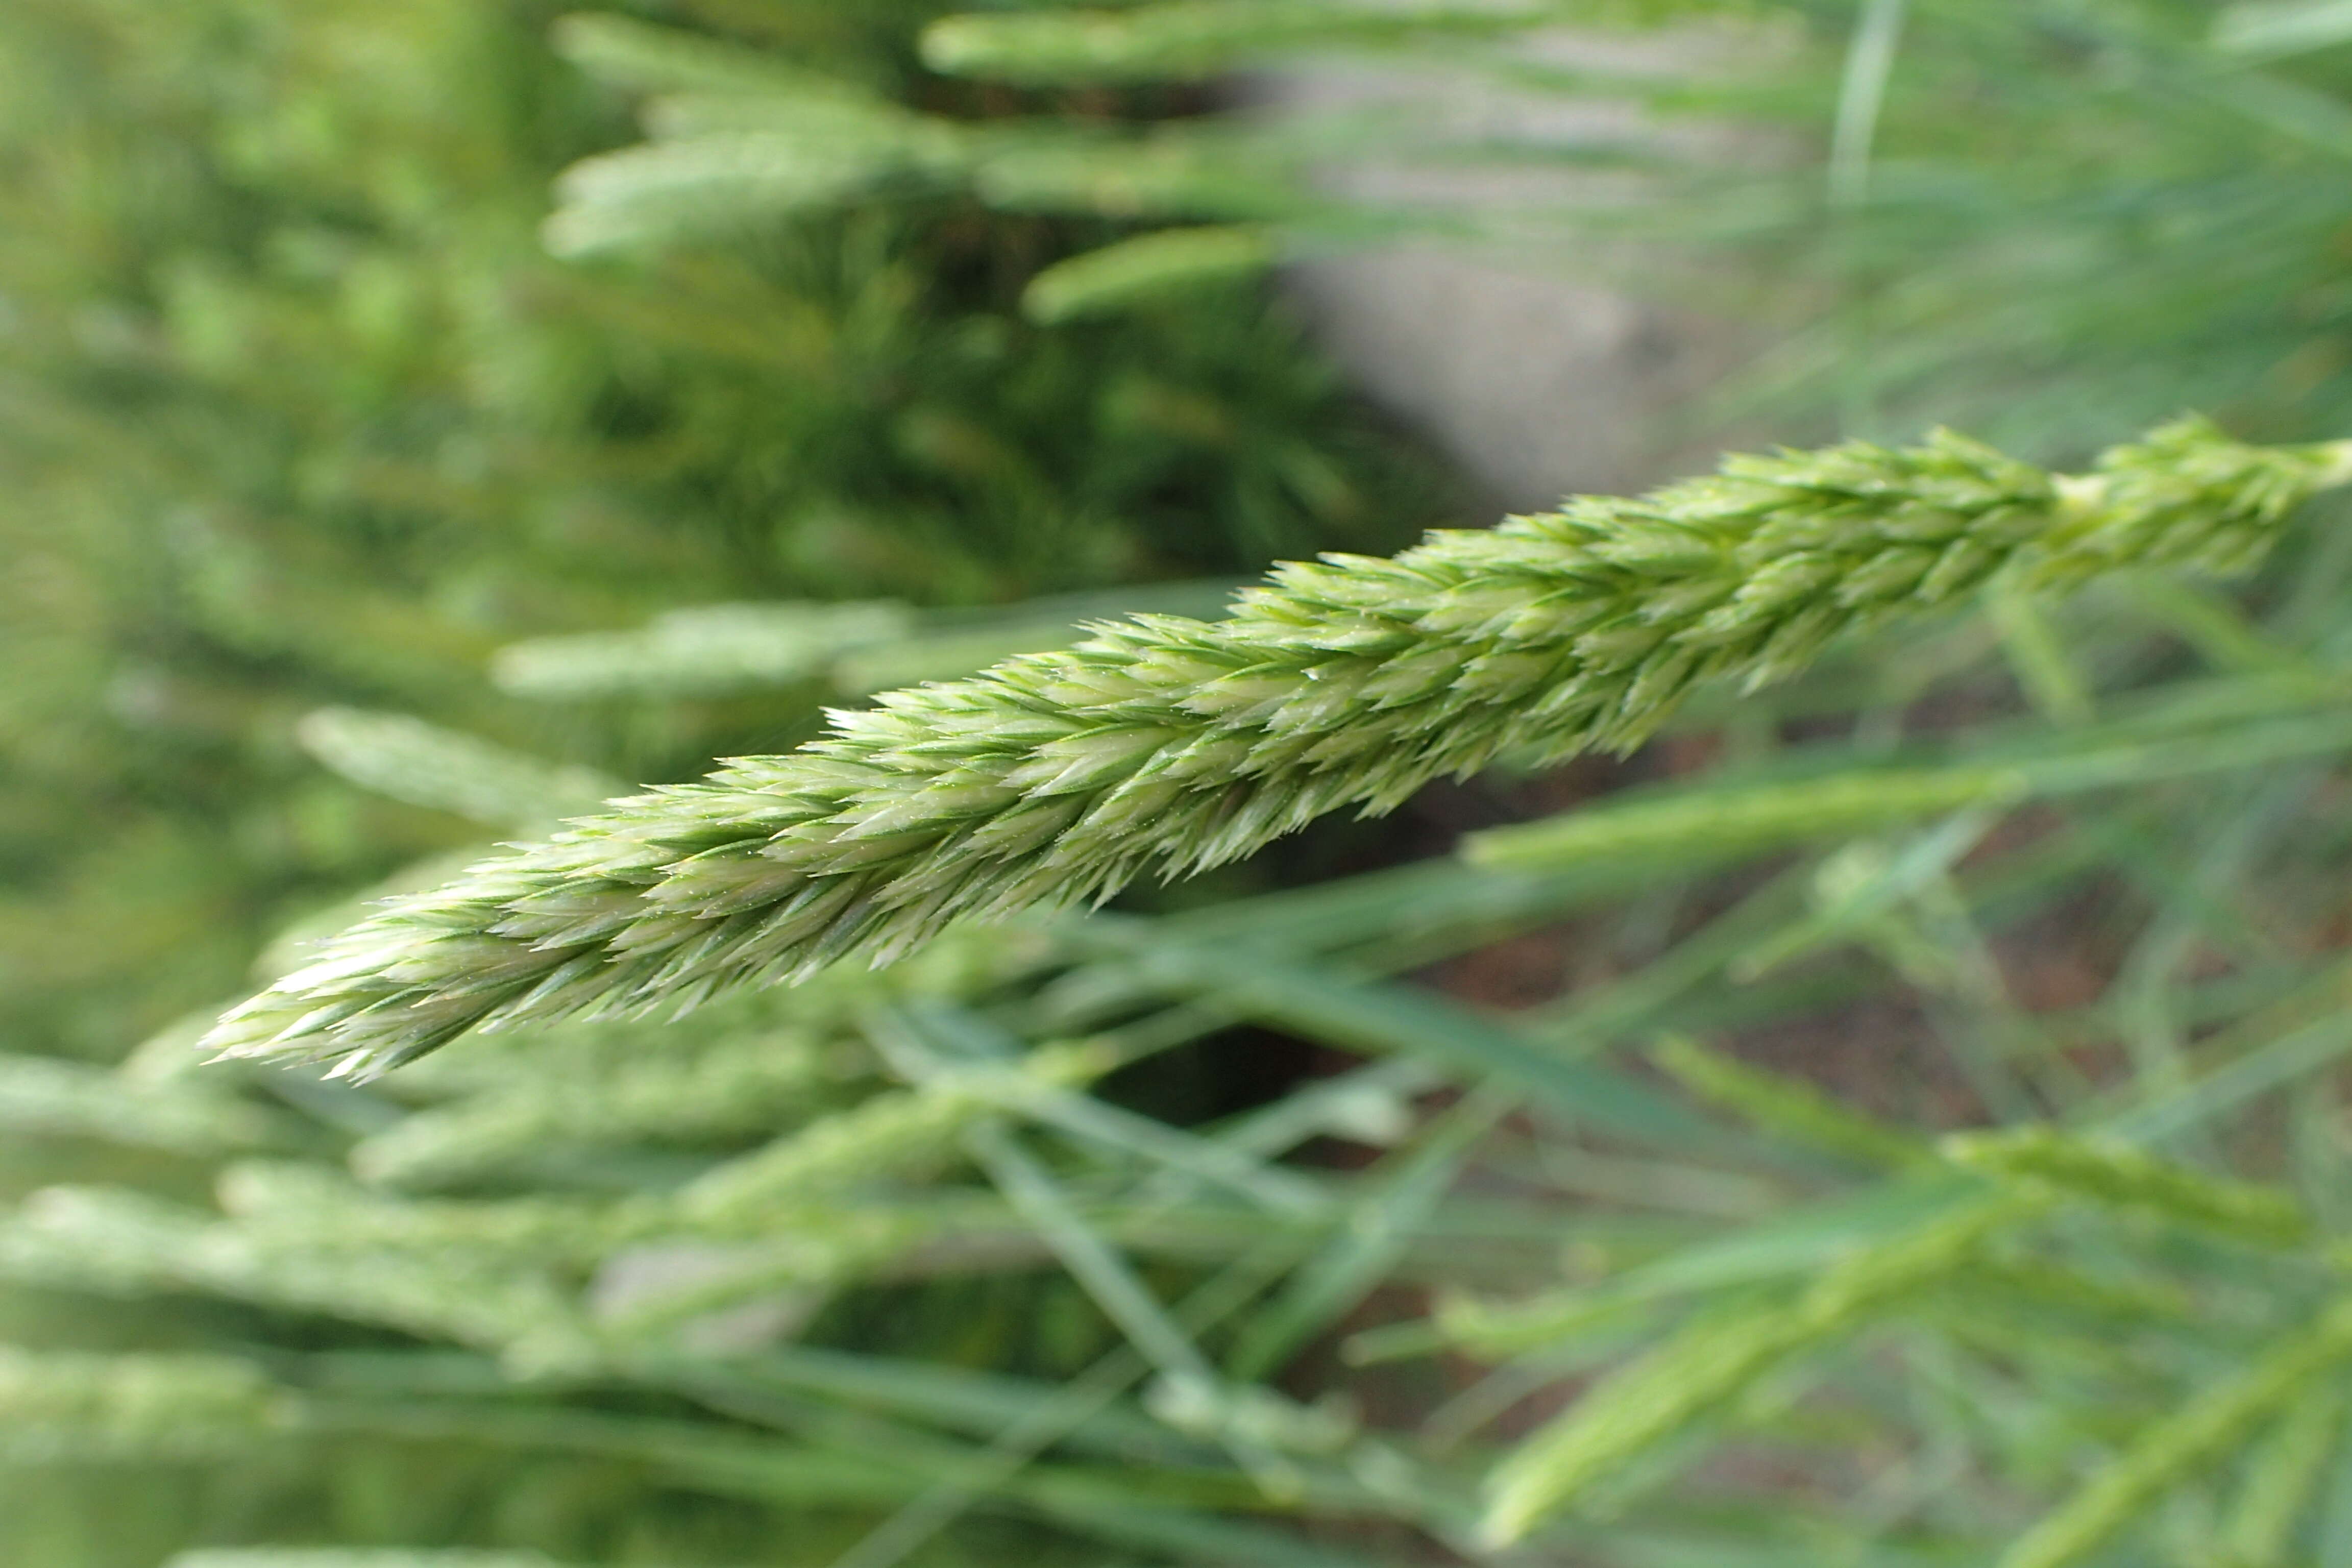 Image of Somerset hair grass